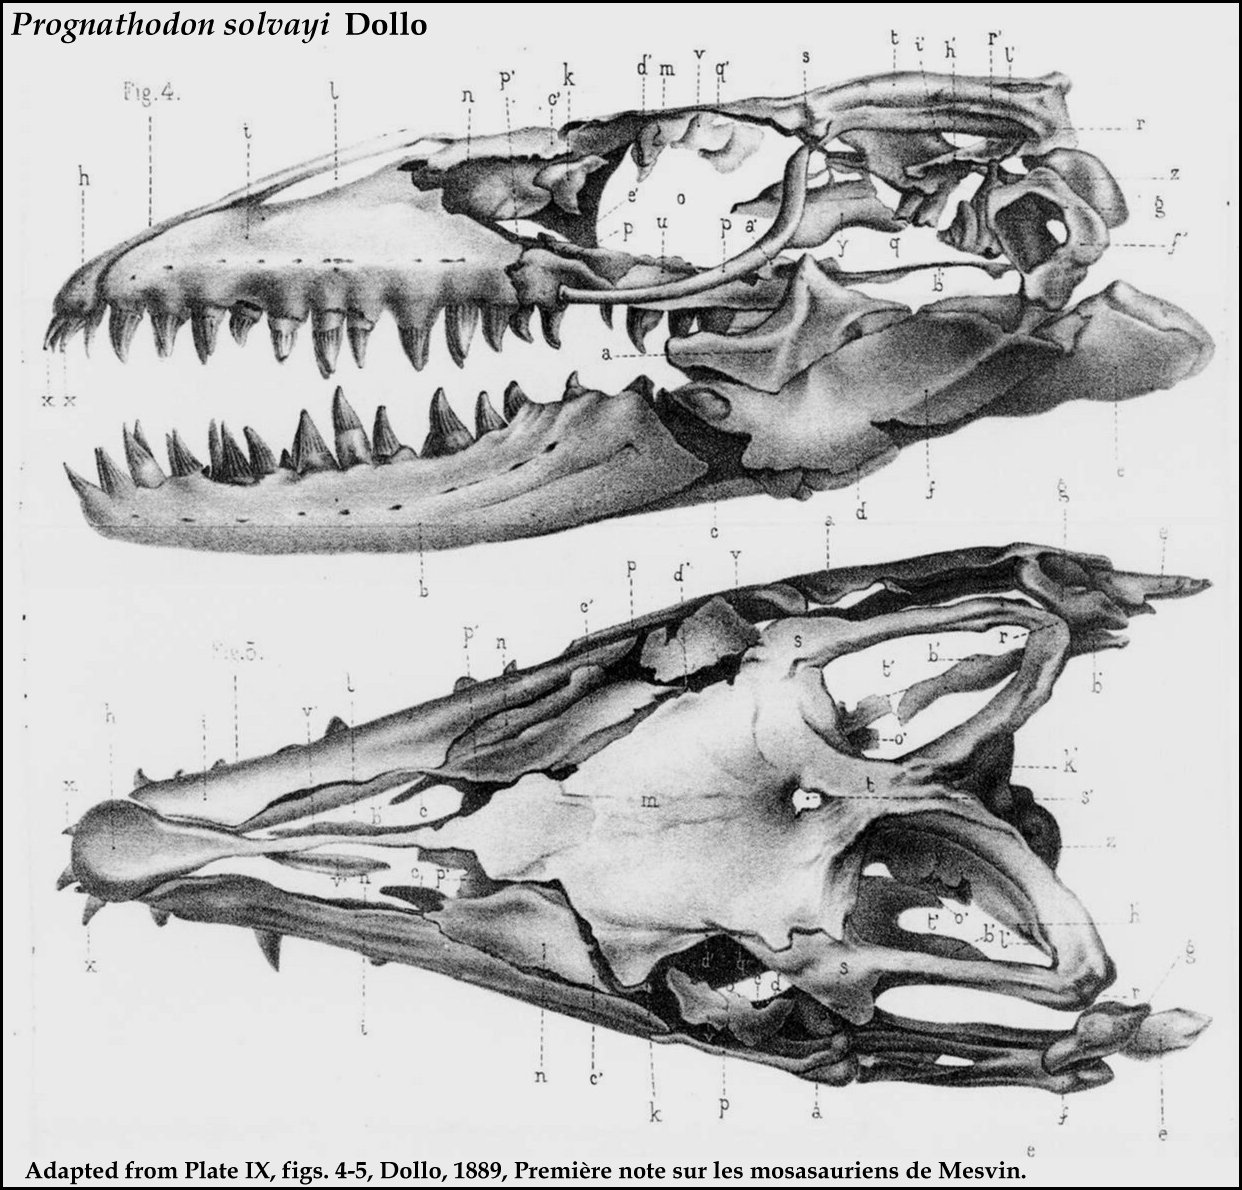 http://www.oceansofkansas.com/Mosasaurs3/Prognathodon_solvayi_Dollo.jpg